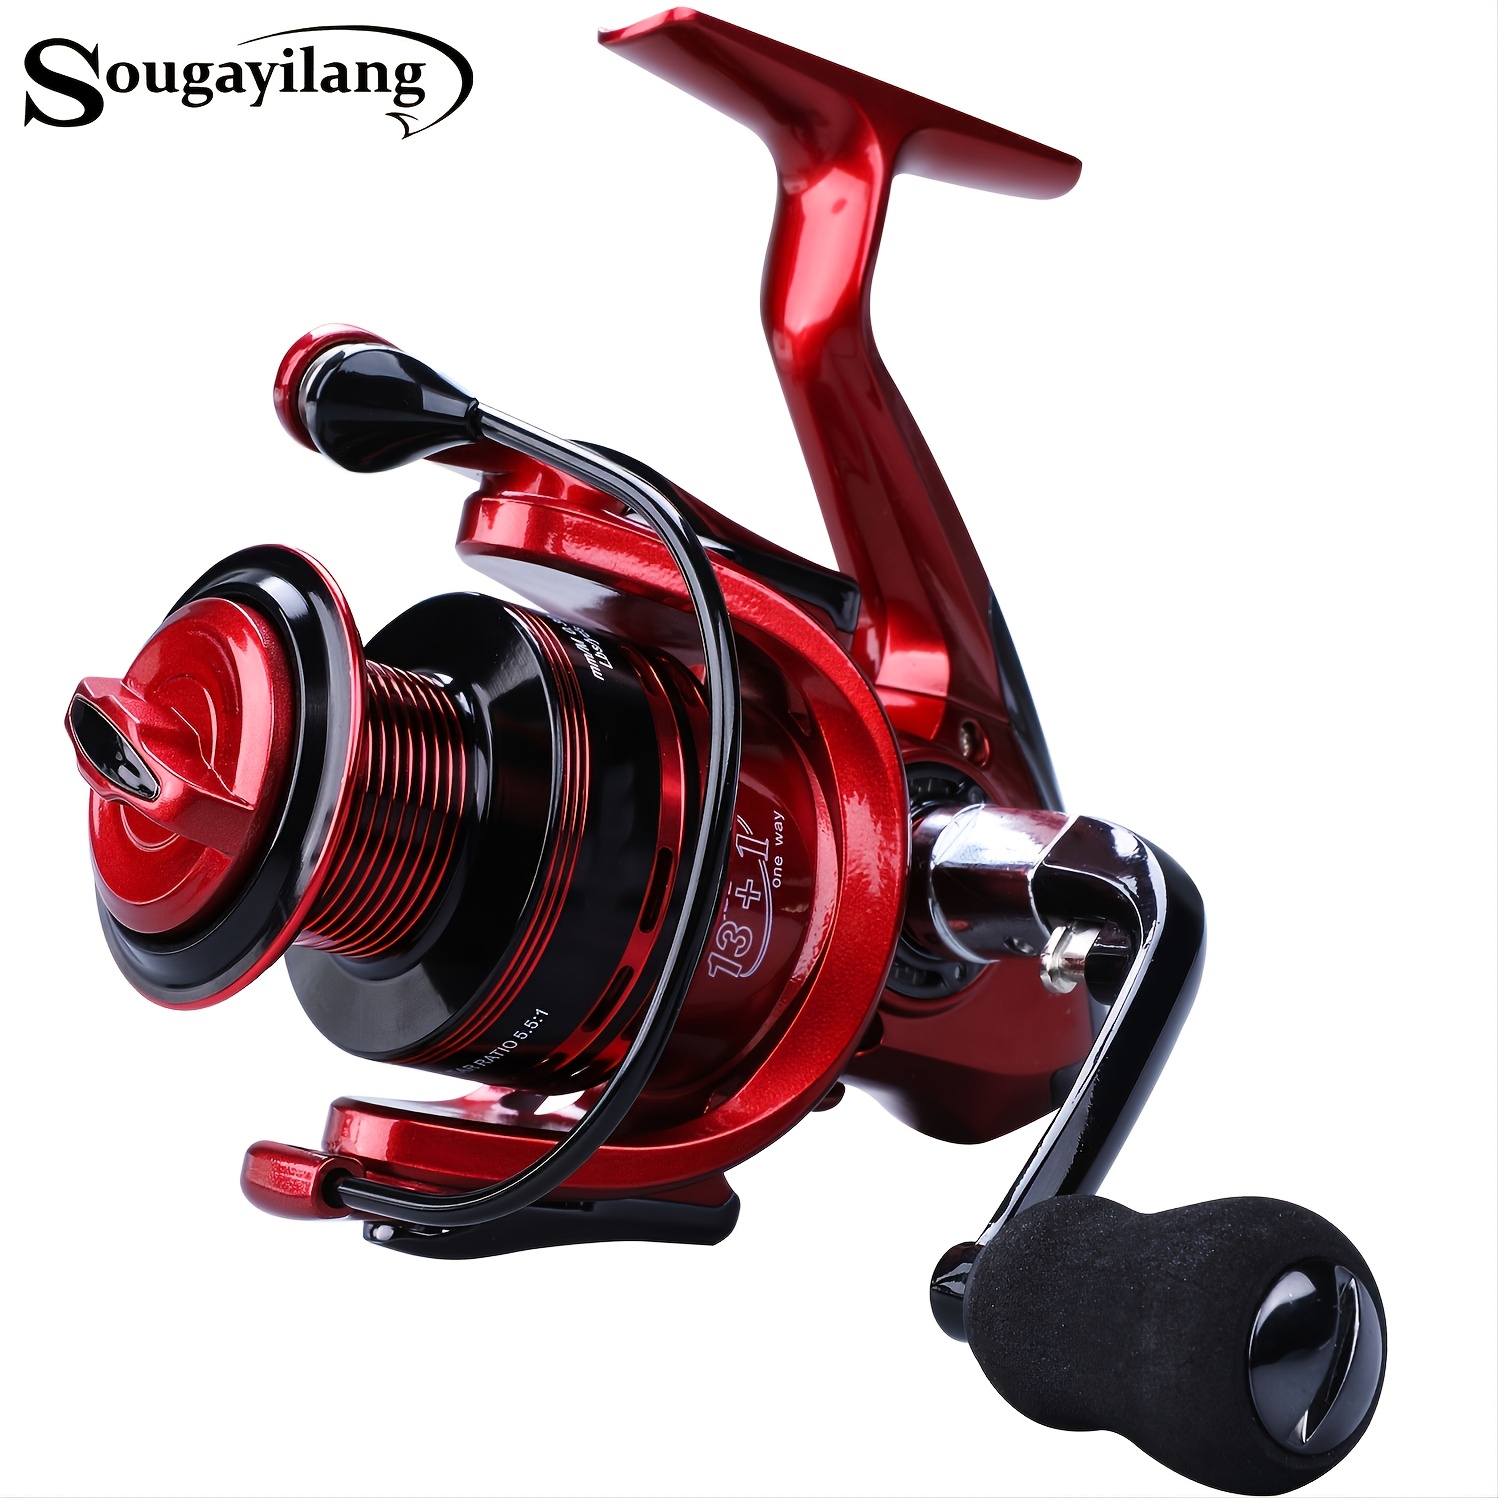 Sougayilang Spinning Fishing Reel: 13+1BB 1000-5000 Series - Ultimate Power  & Performance!